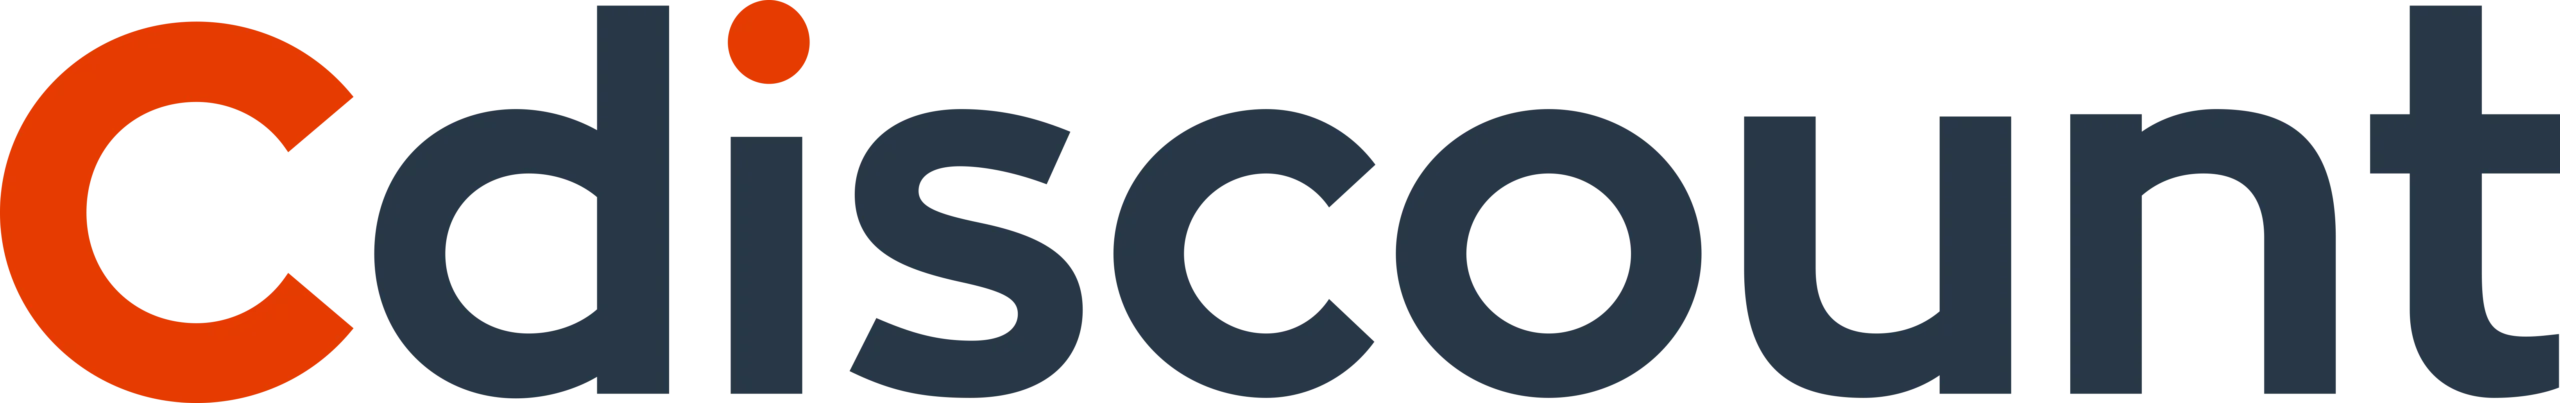 cdiscount_logo